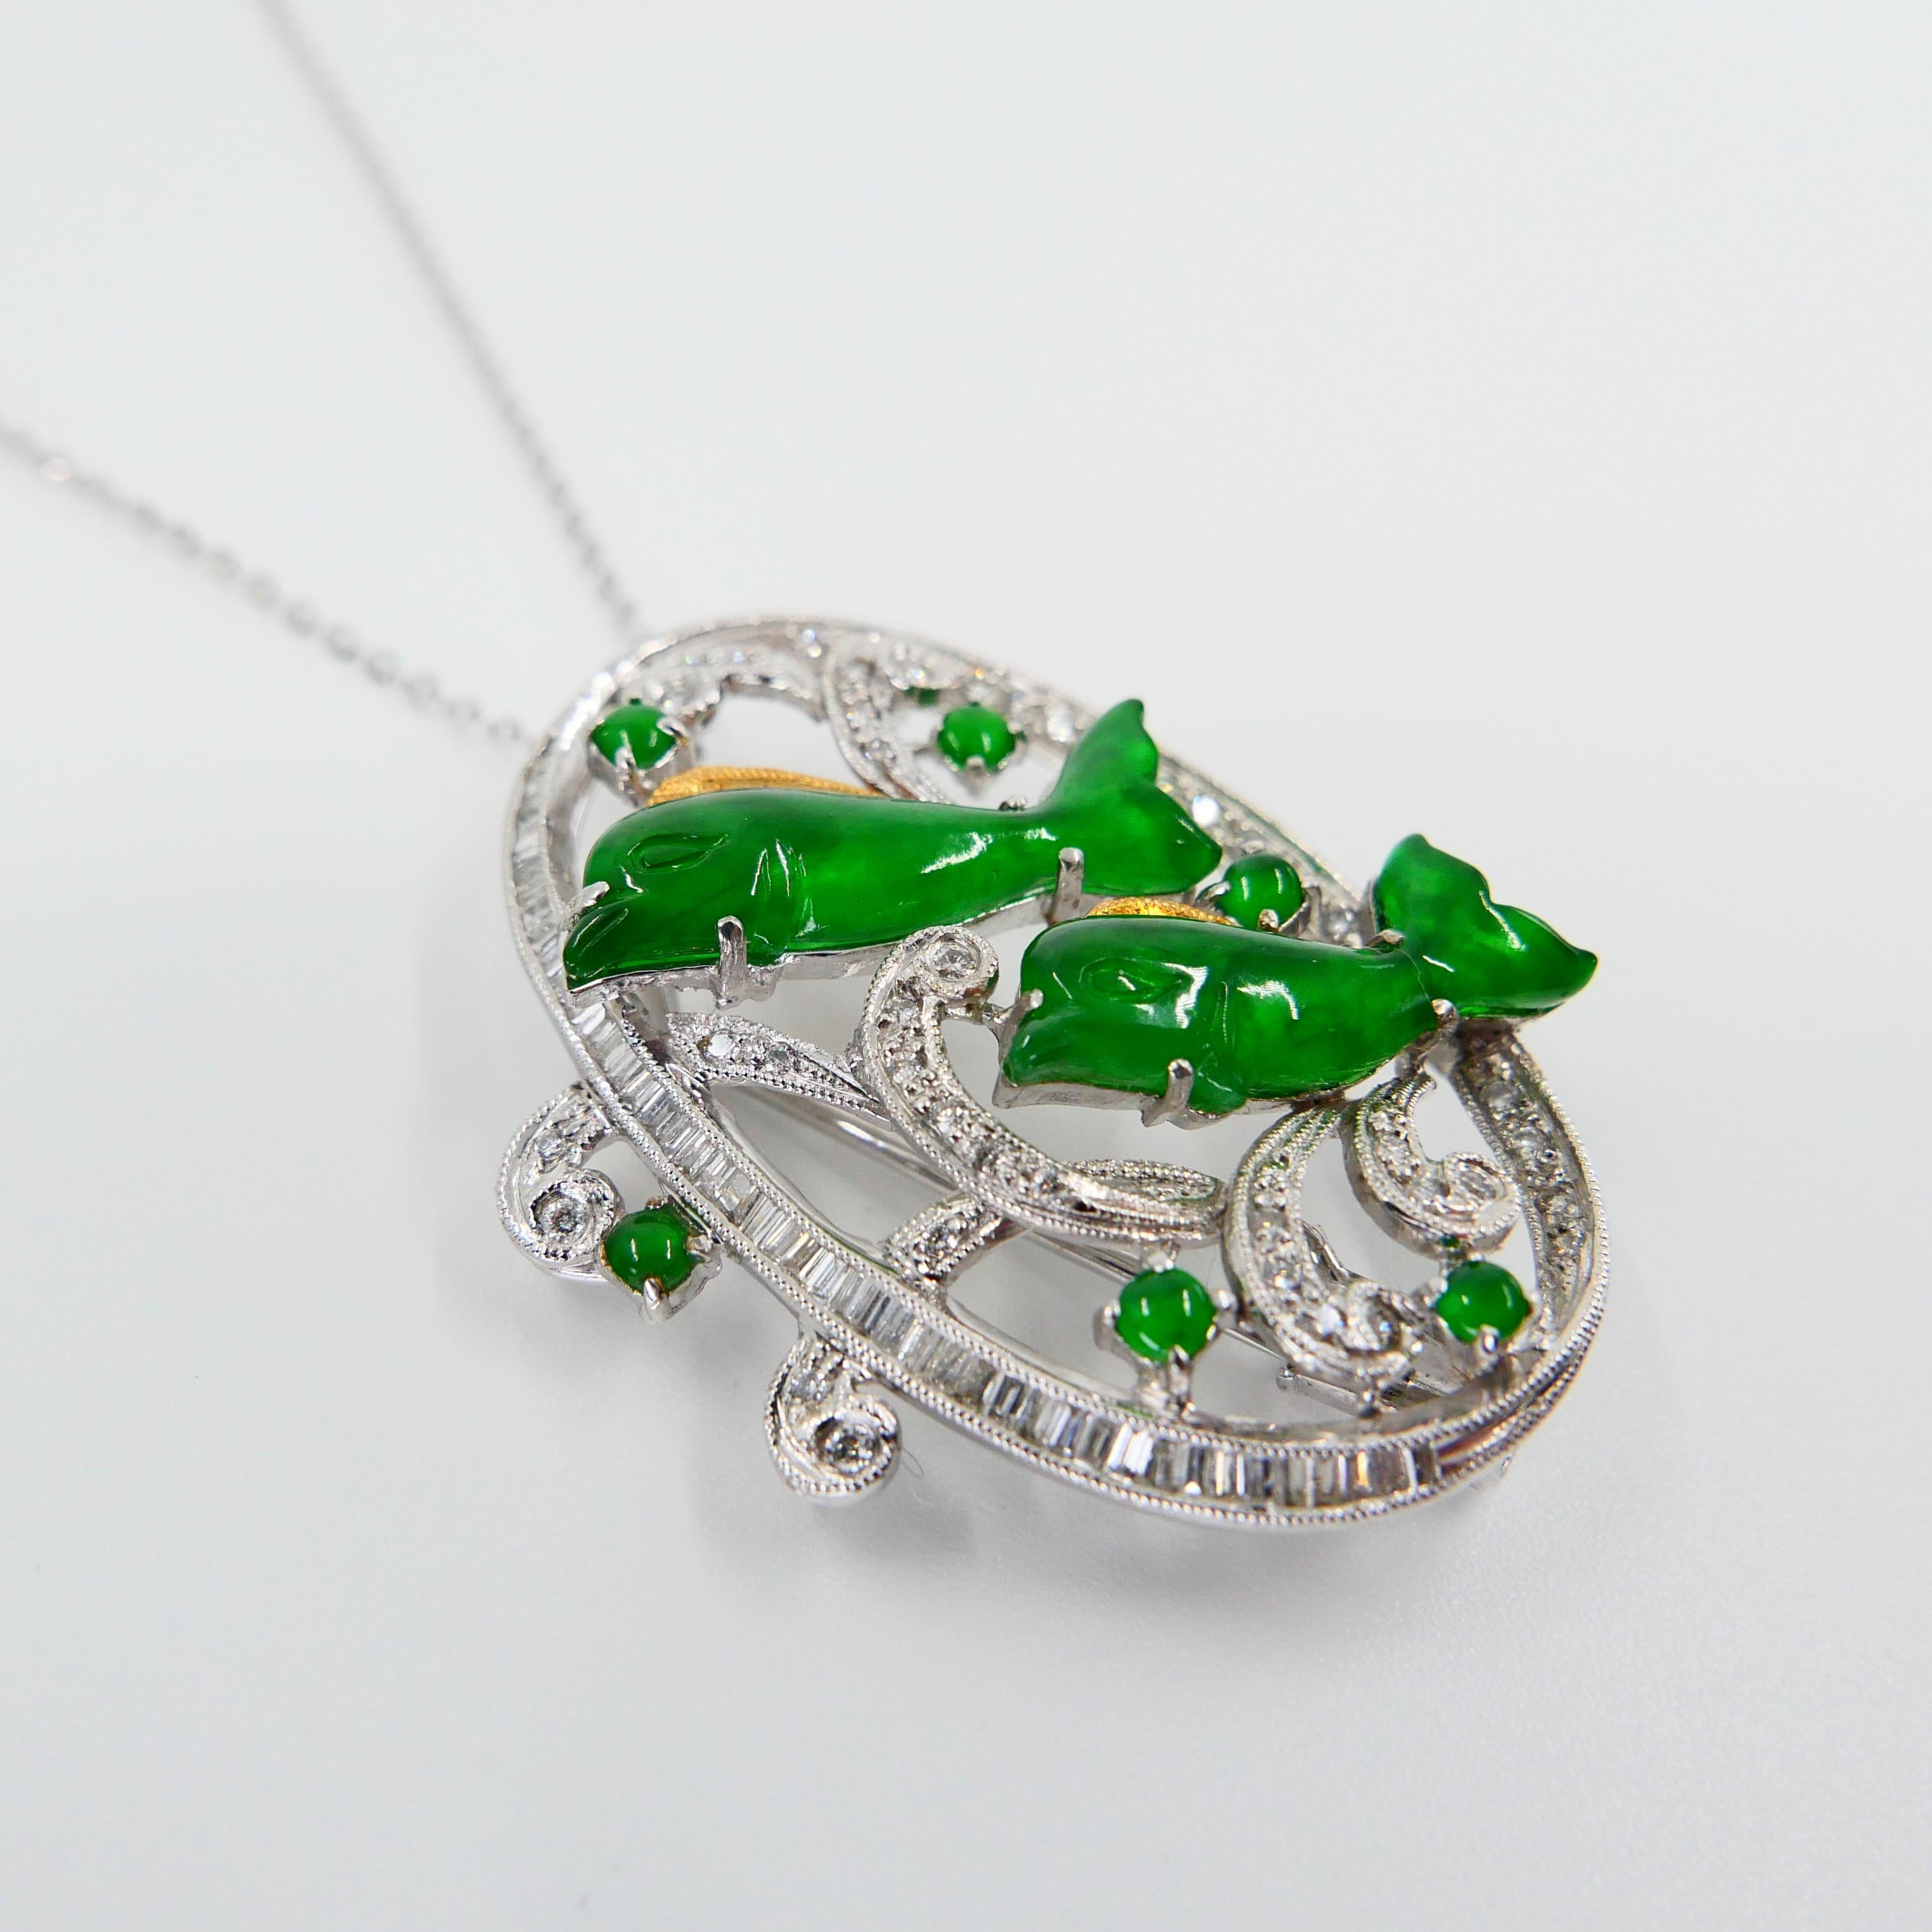 Broche pendentif en diamants et jade naturel certifié vert pomme vif, avec dauphins en vente 1